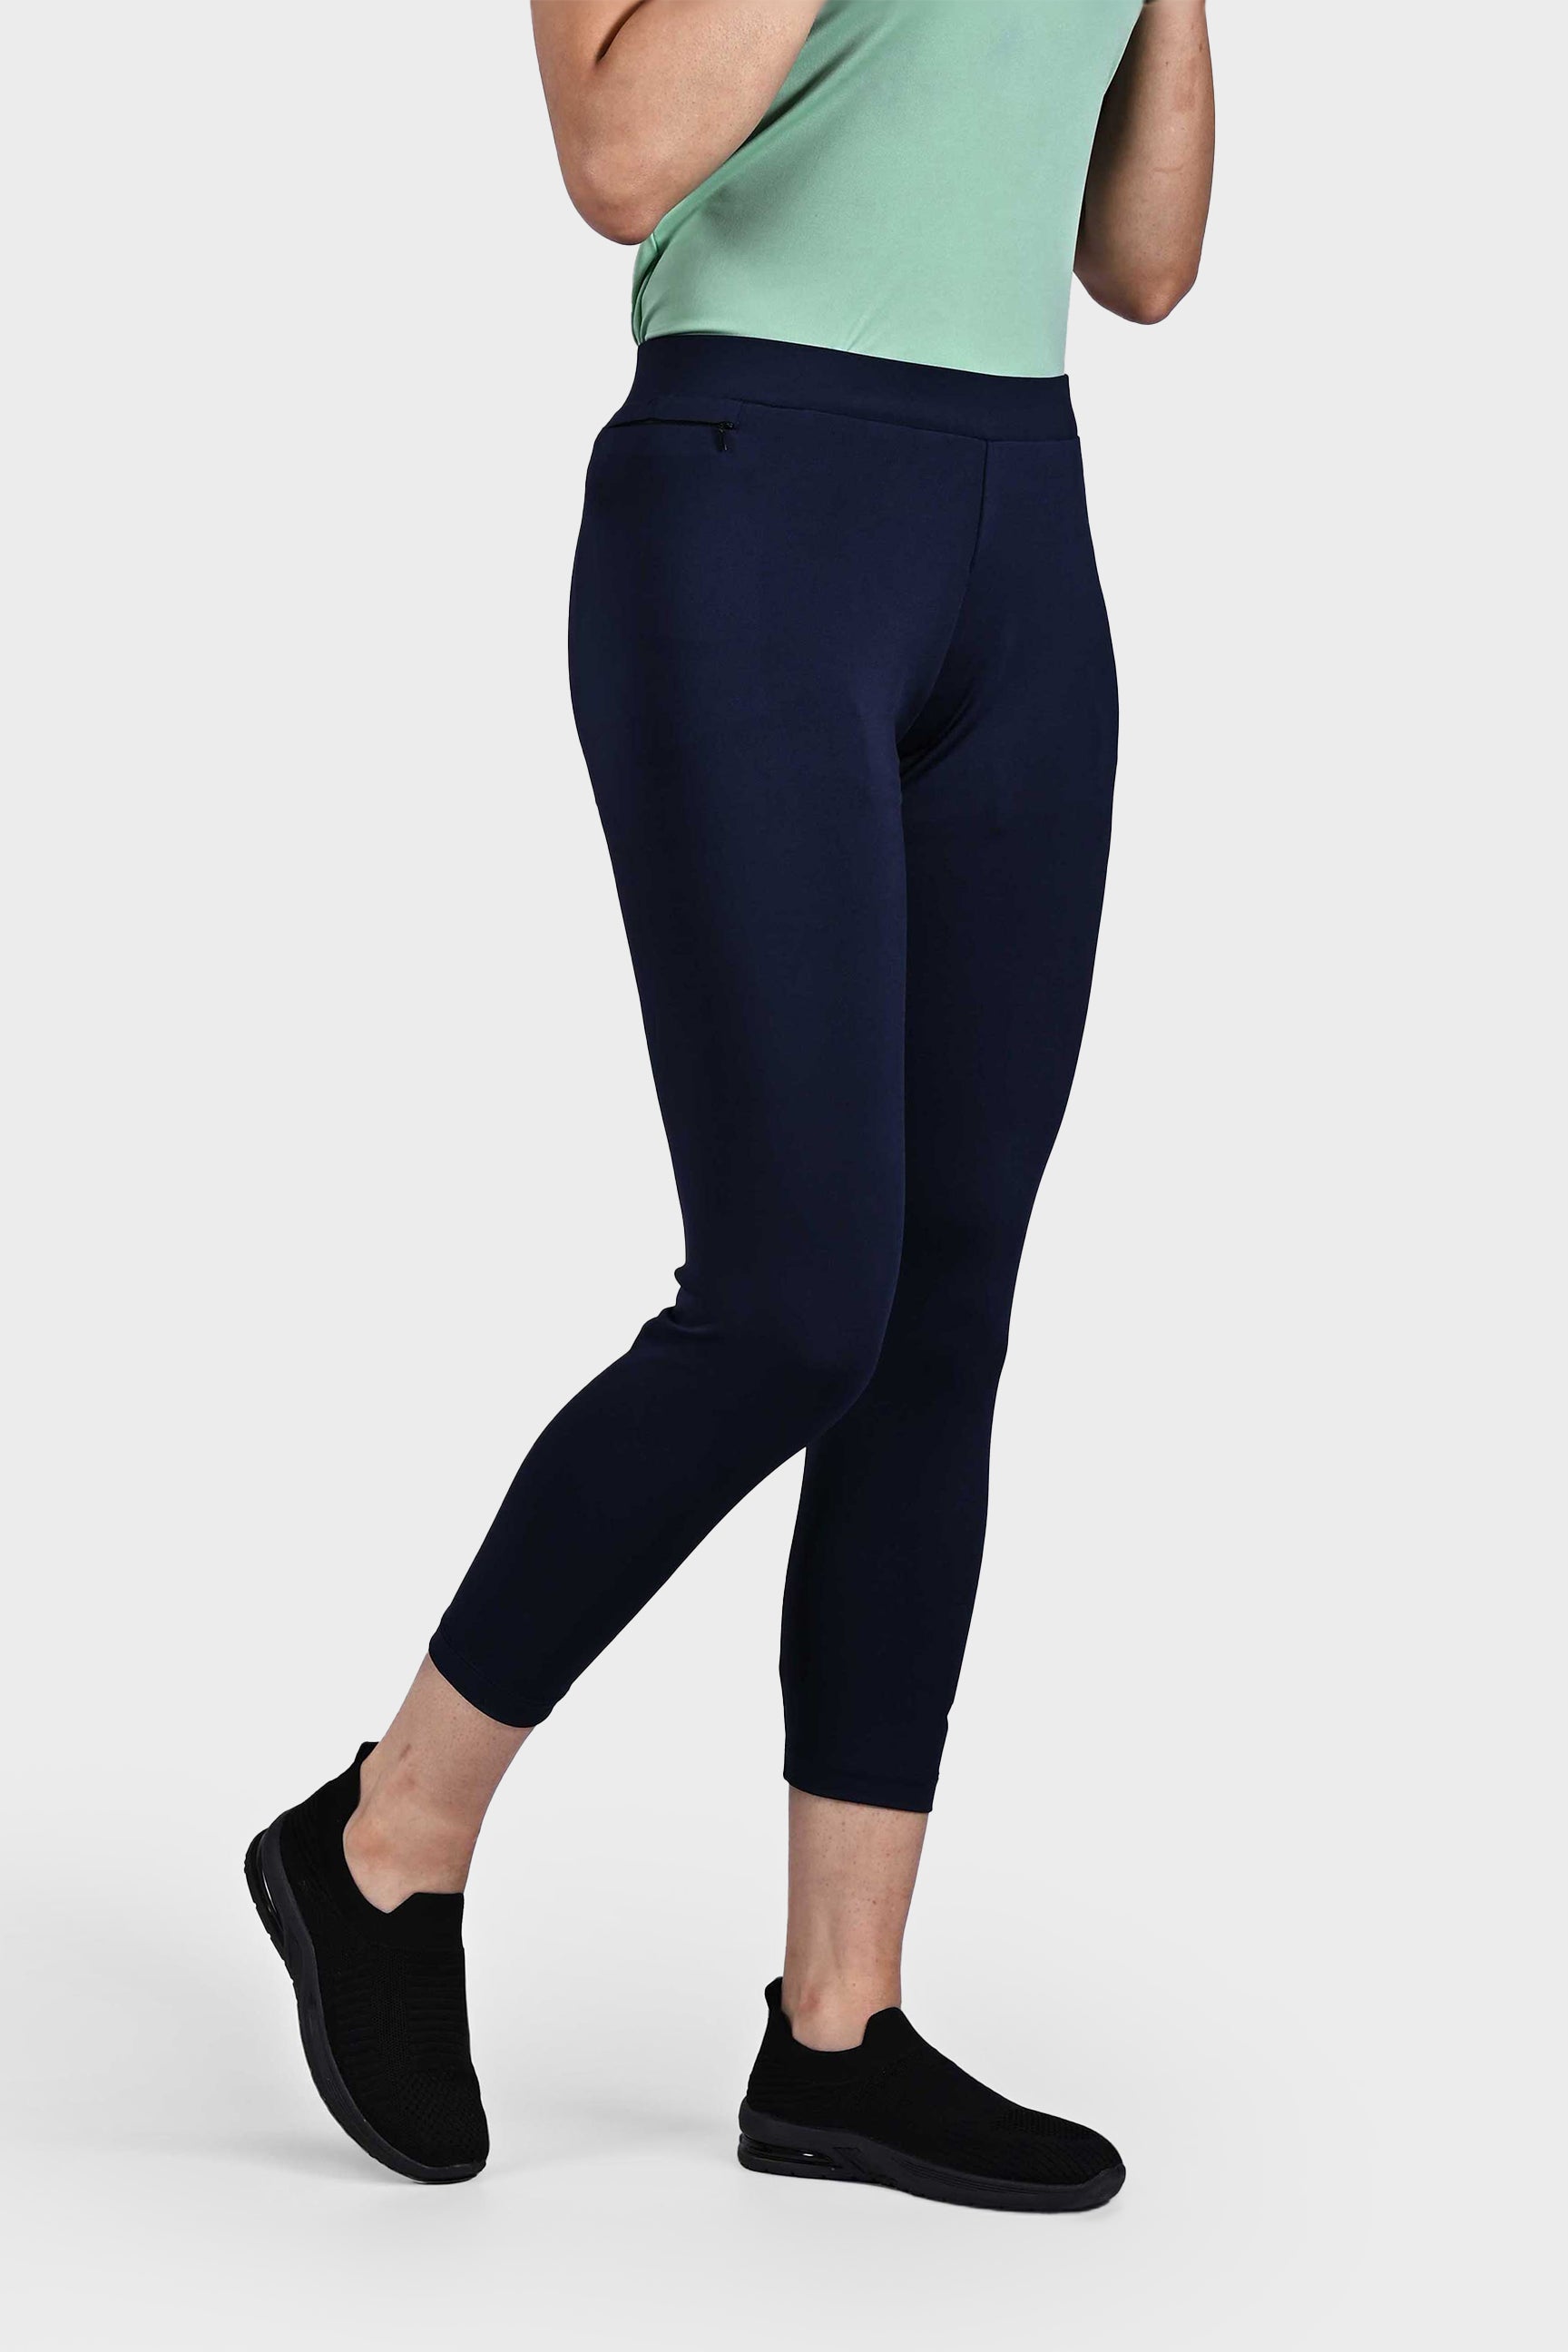 Buy Go Colors Women Solid Dark Jean Blue Cotton Cropped Leggings Online